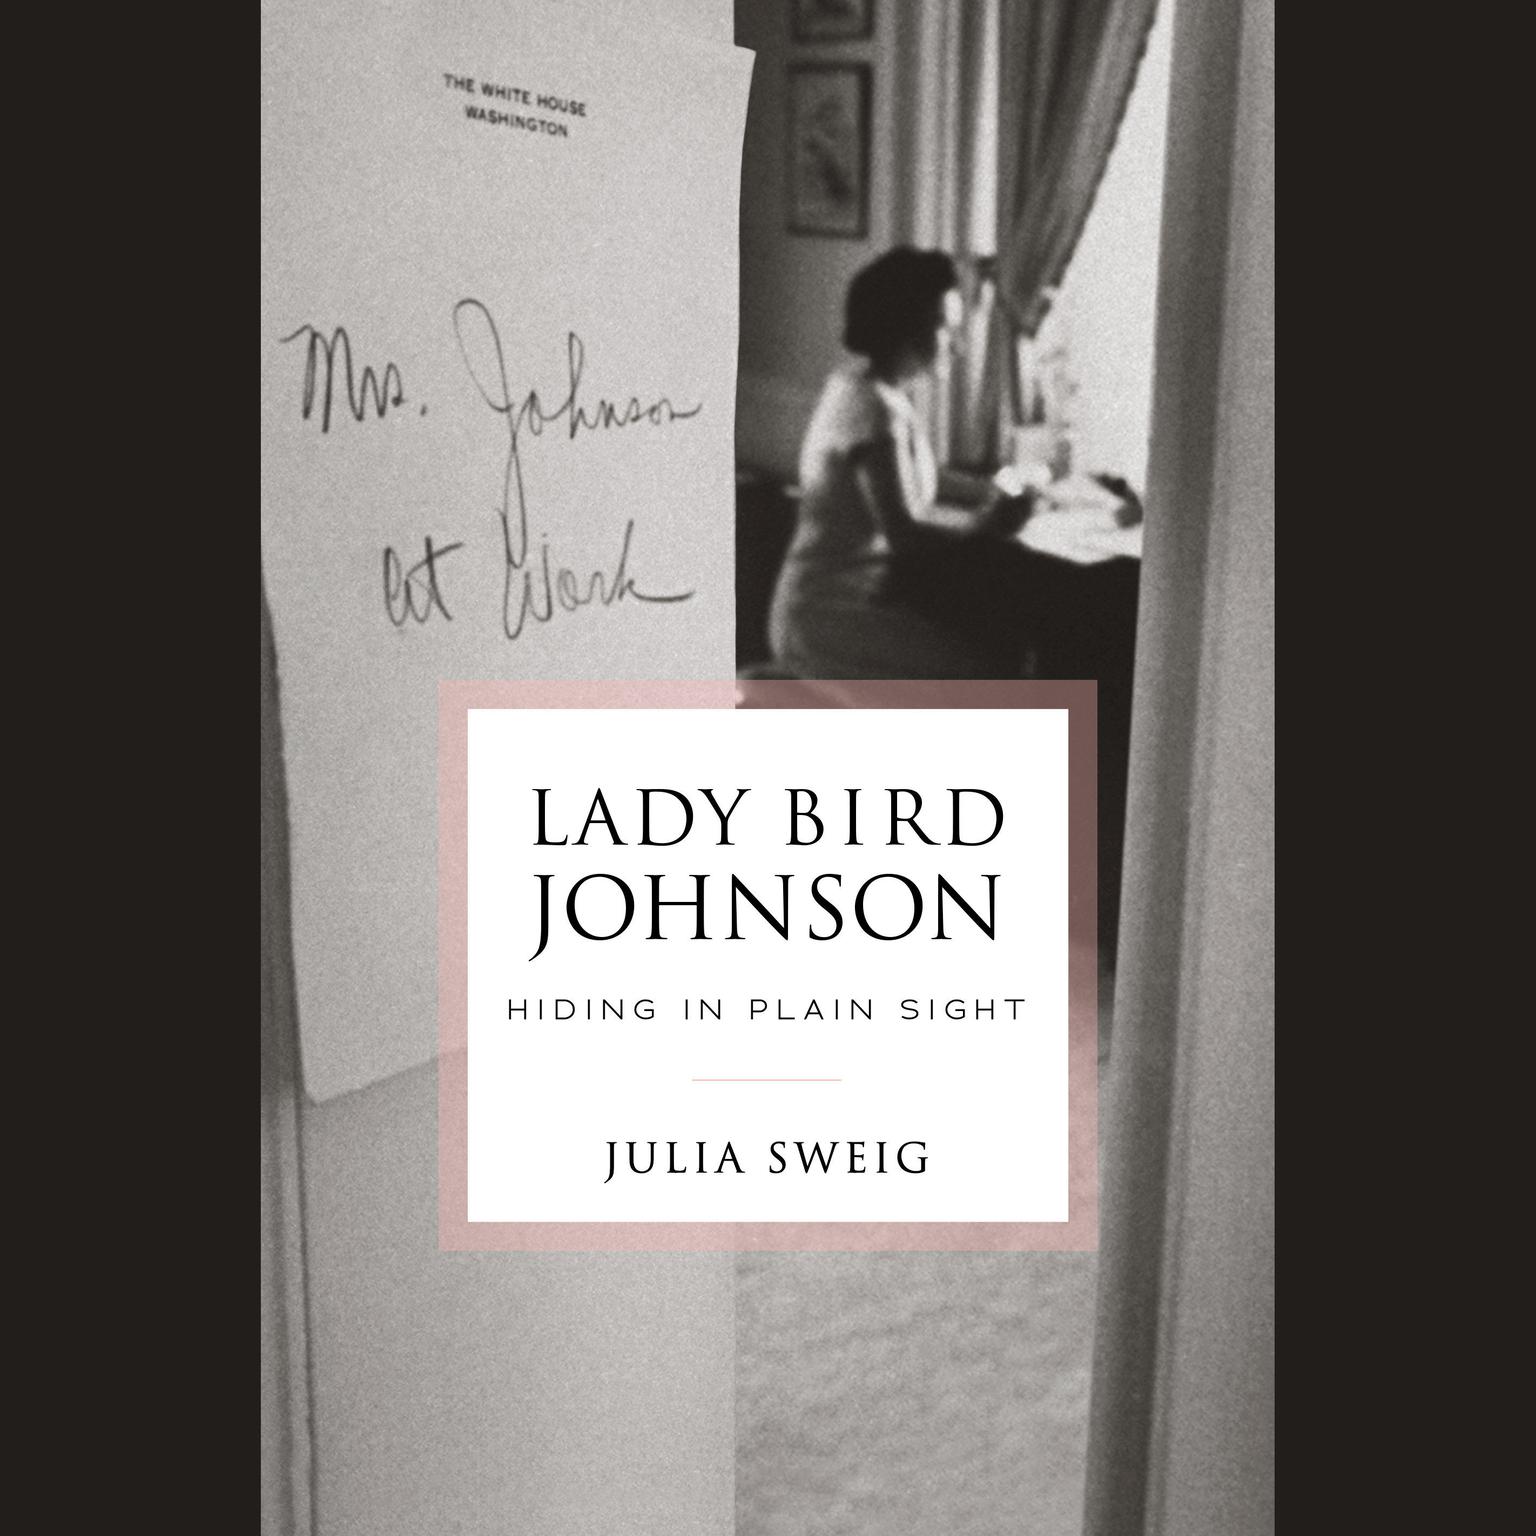 Lady Bird Johnson: Hiding in Plain Sight: Hiding in Plain Sight Audiobook, by Julia Sweig